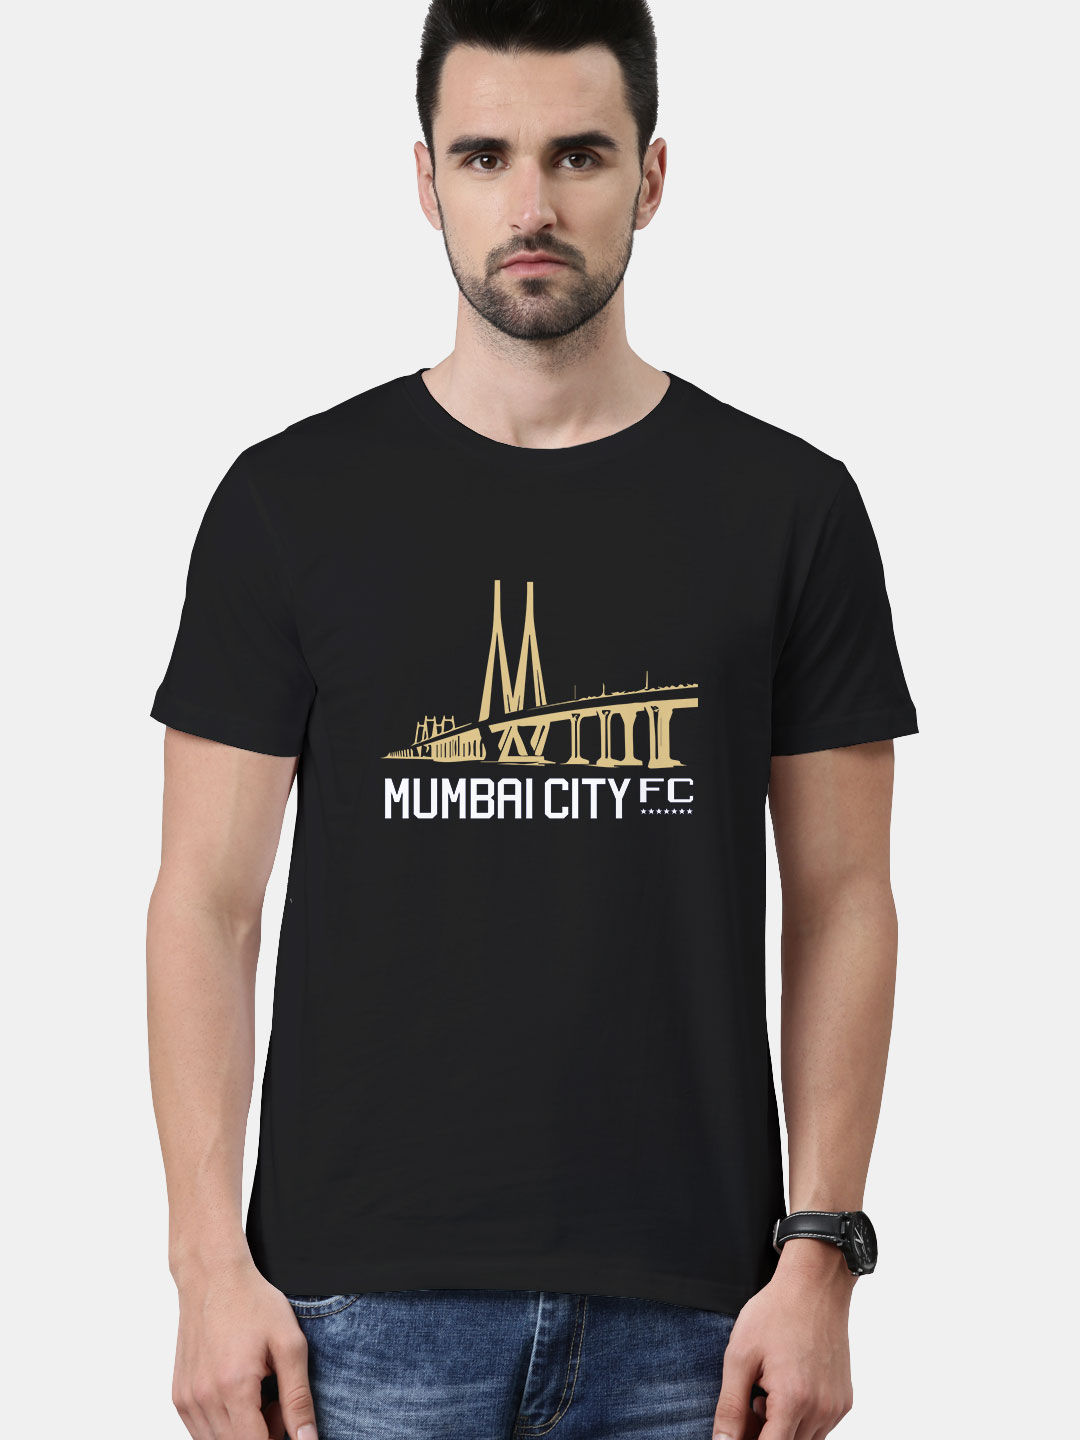 Buy MCFC Mumbai City - Male Designer T-Shirts Black T-Shirts Online